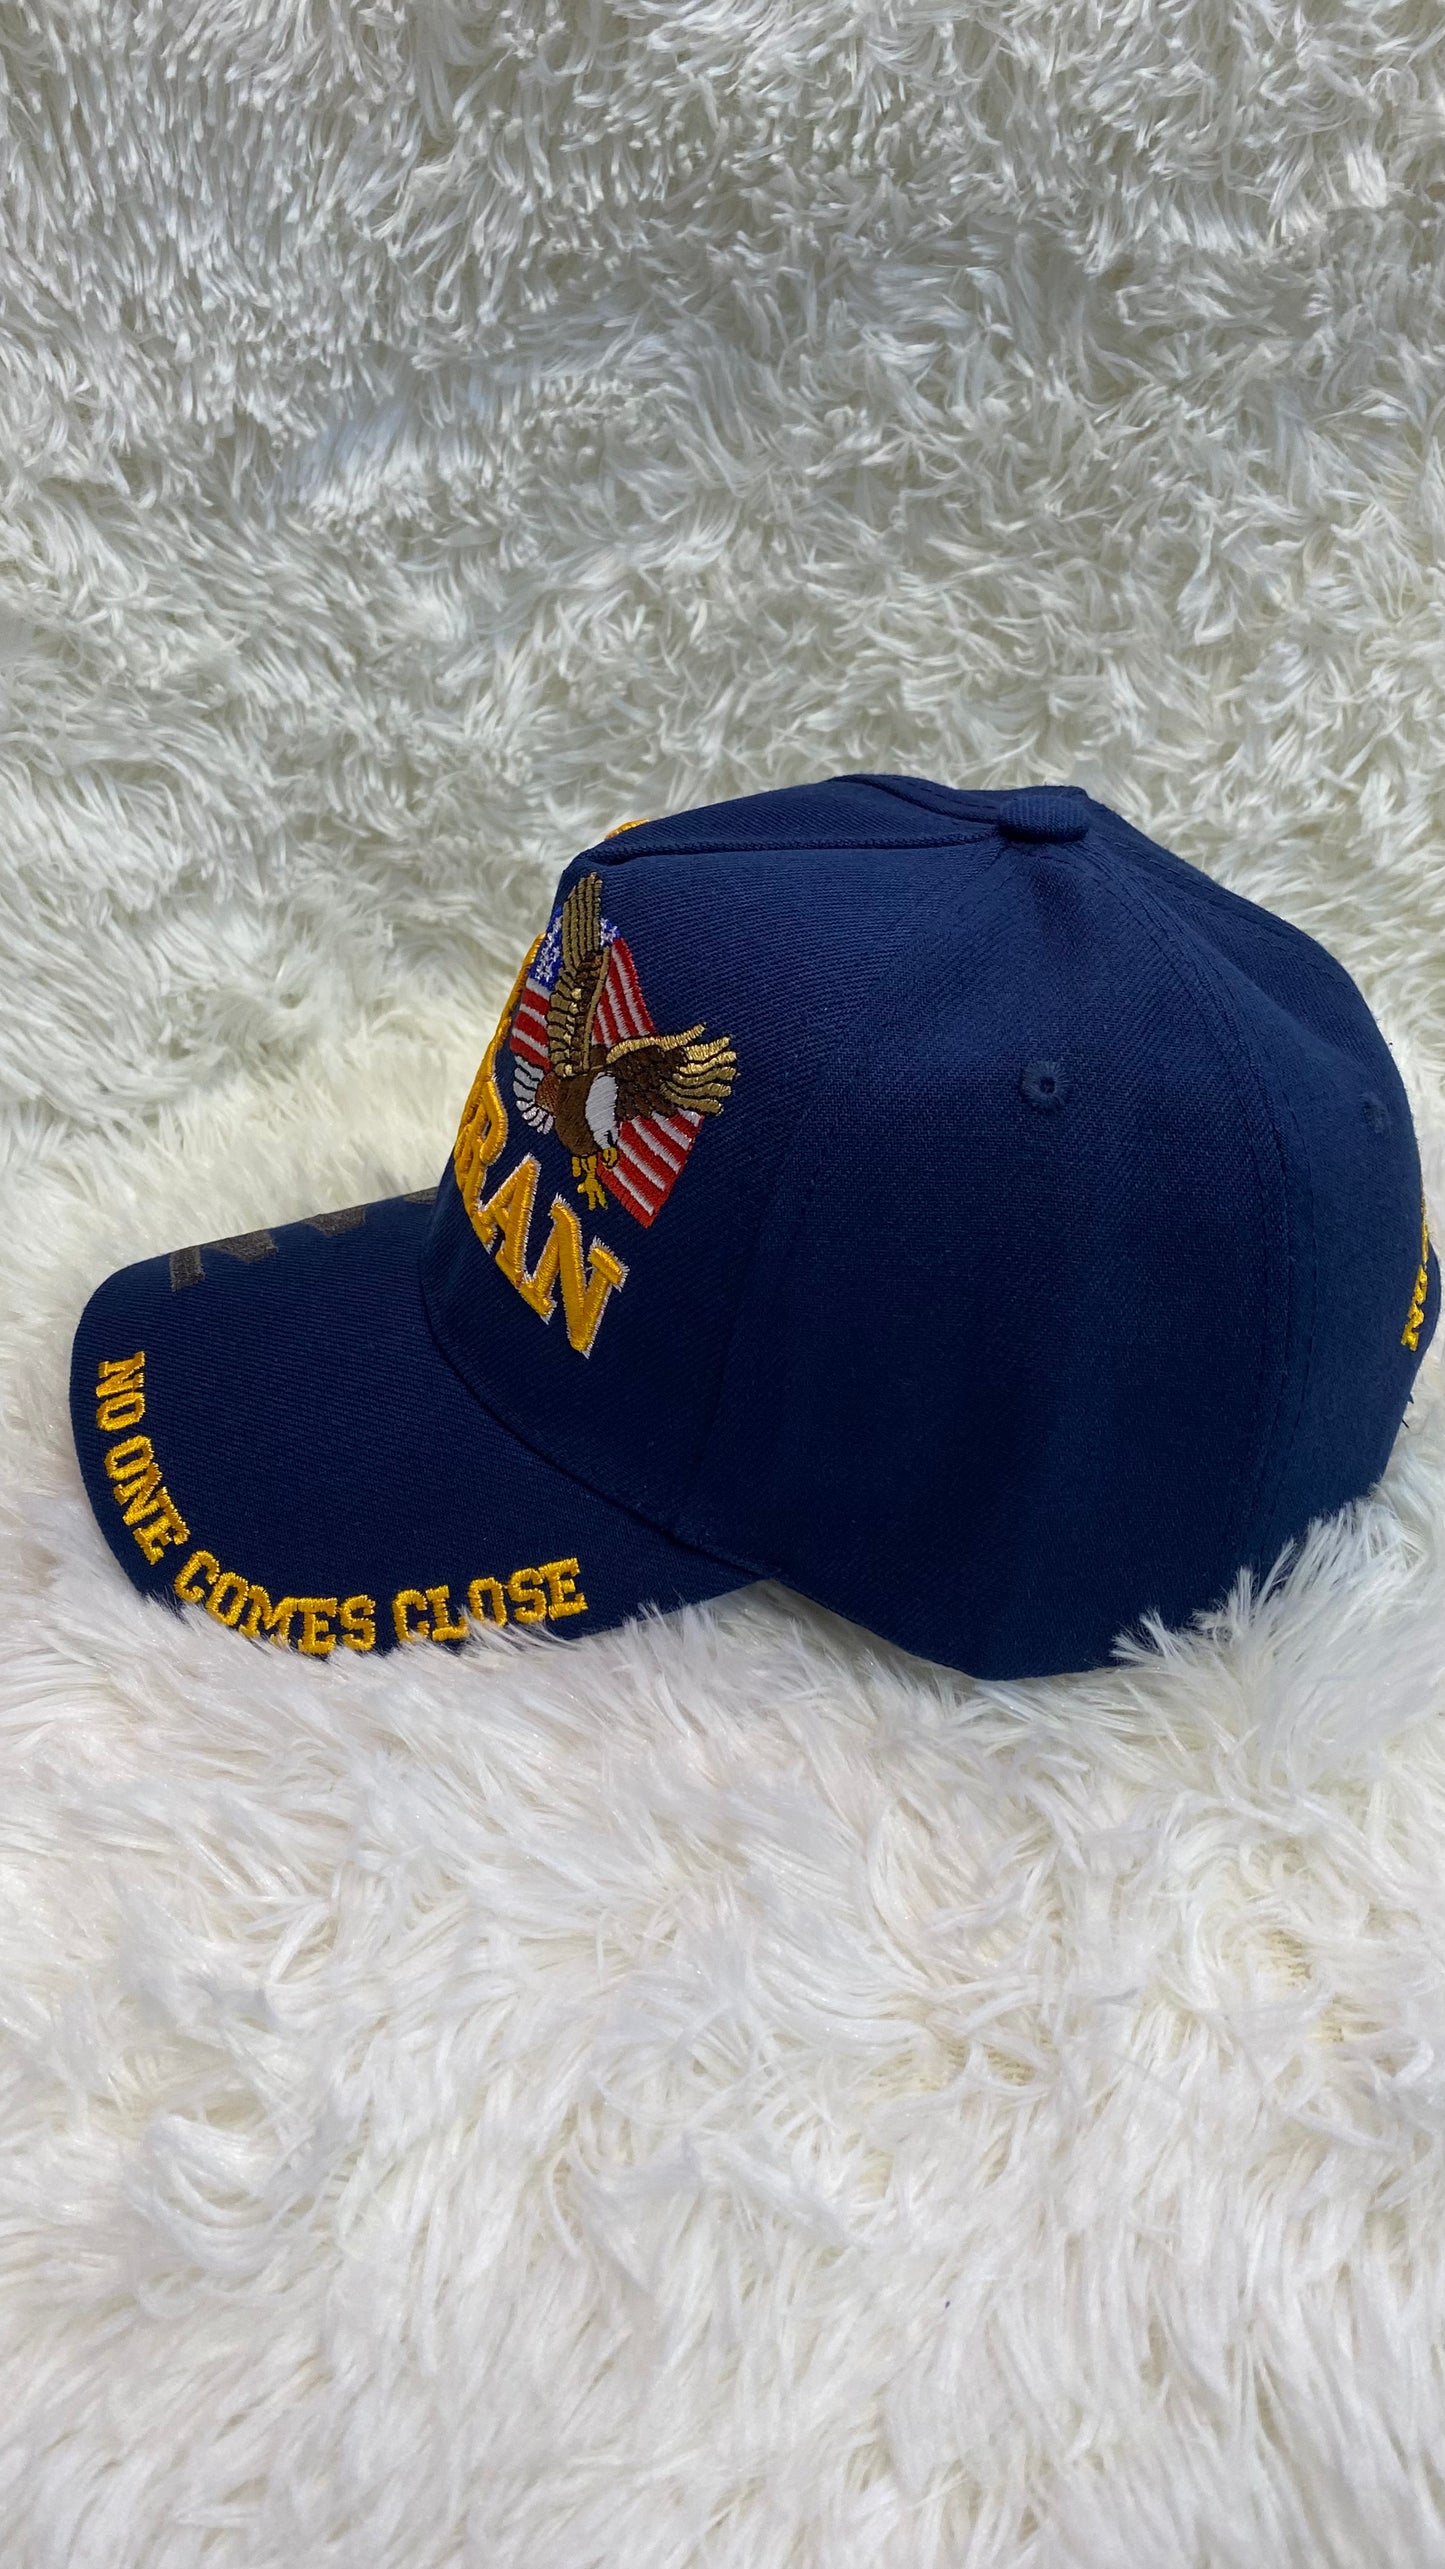 US Air Force Veteran Blue hat